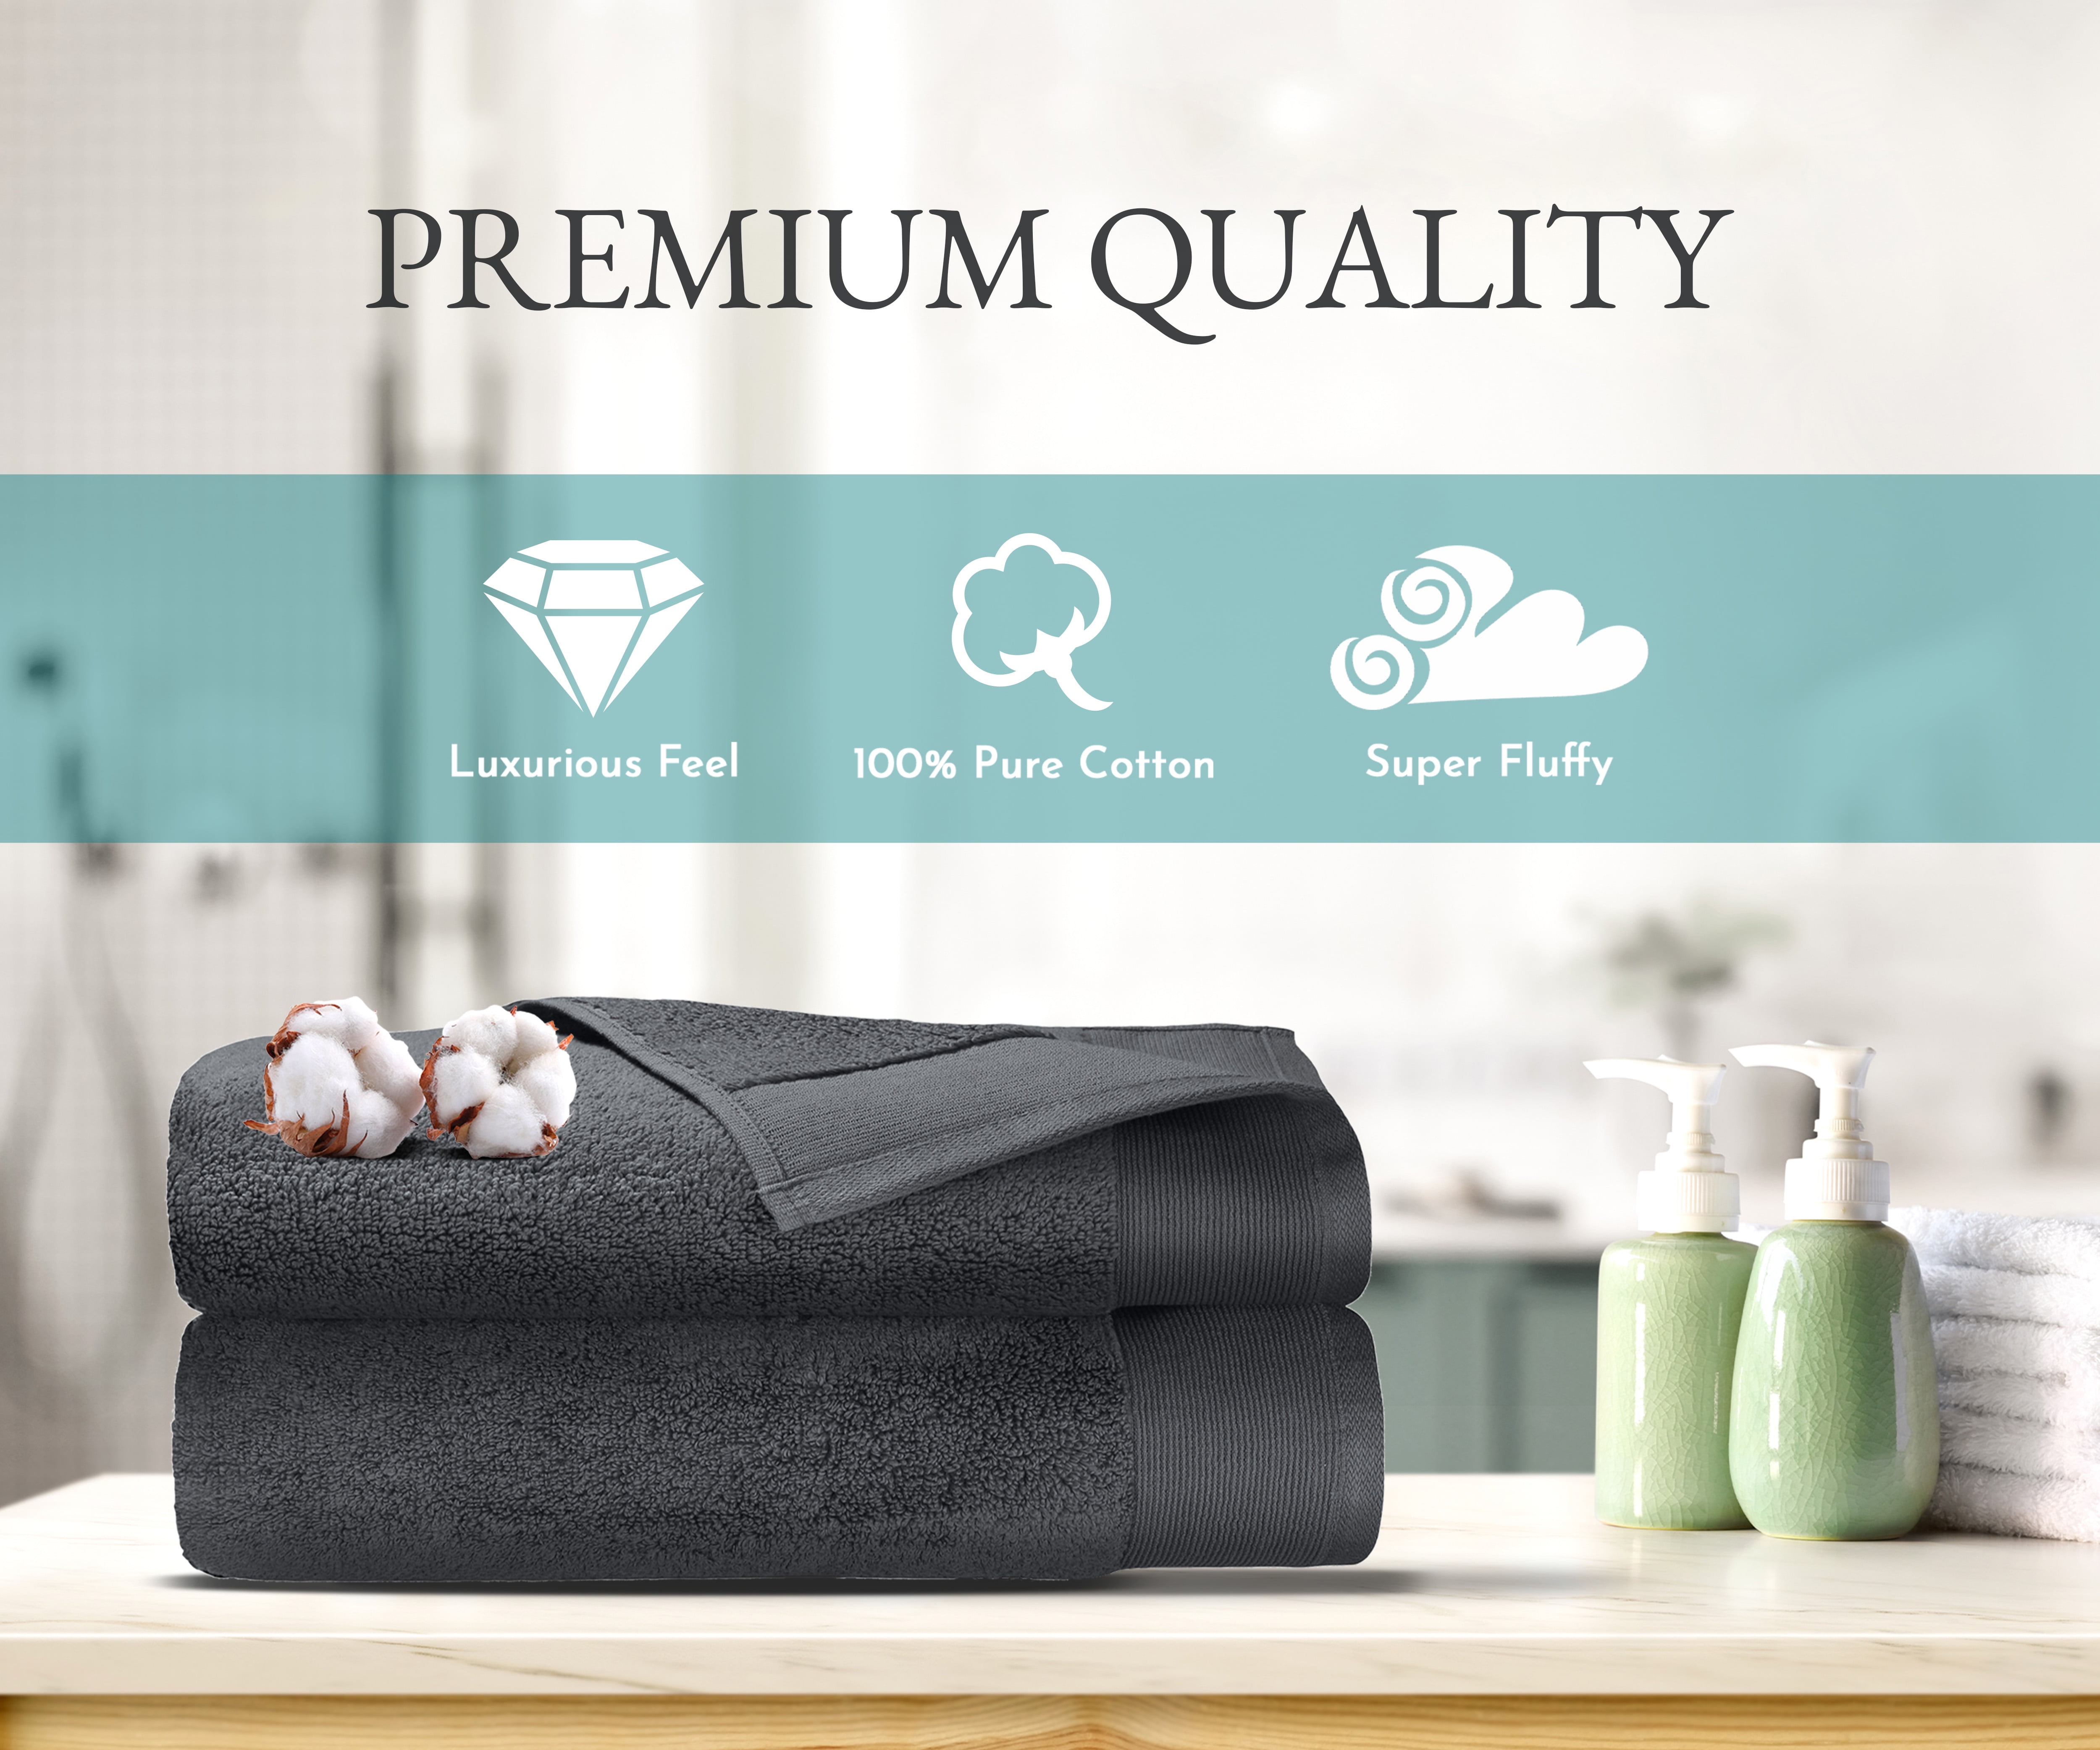 American Comfort Luxury White Bath Towels - 27.5 x 55 (4 Piece) –  American Comfort Luxury Linens